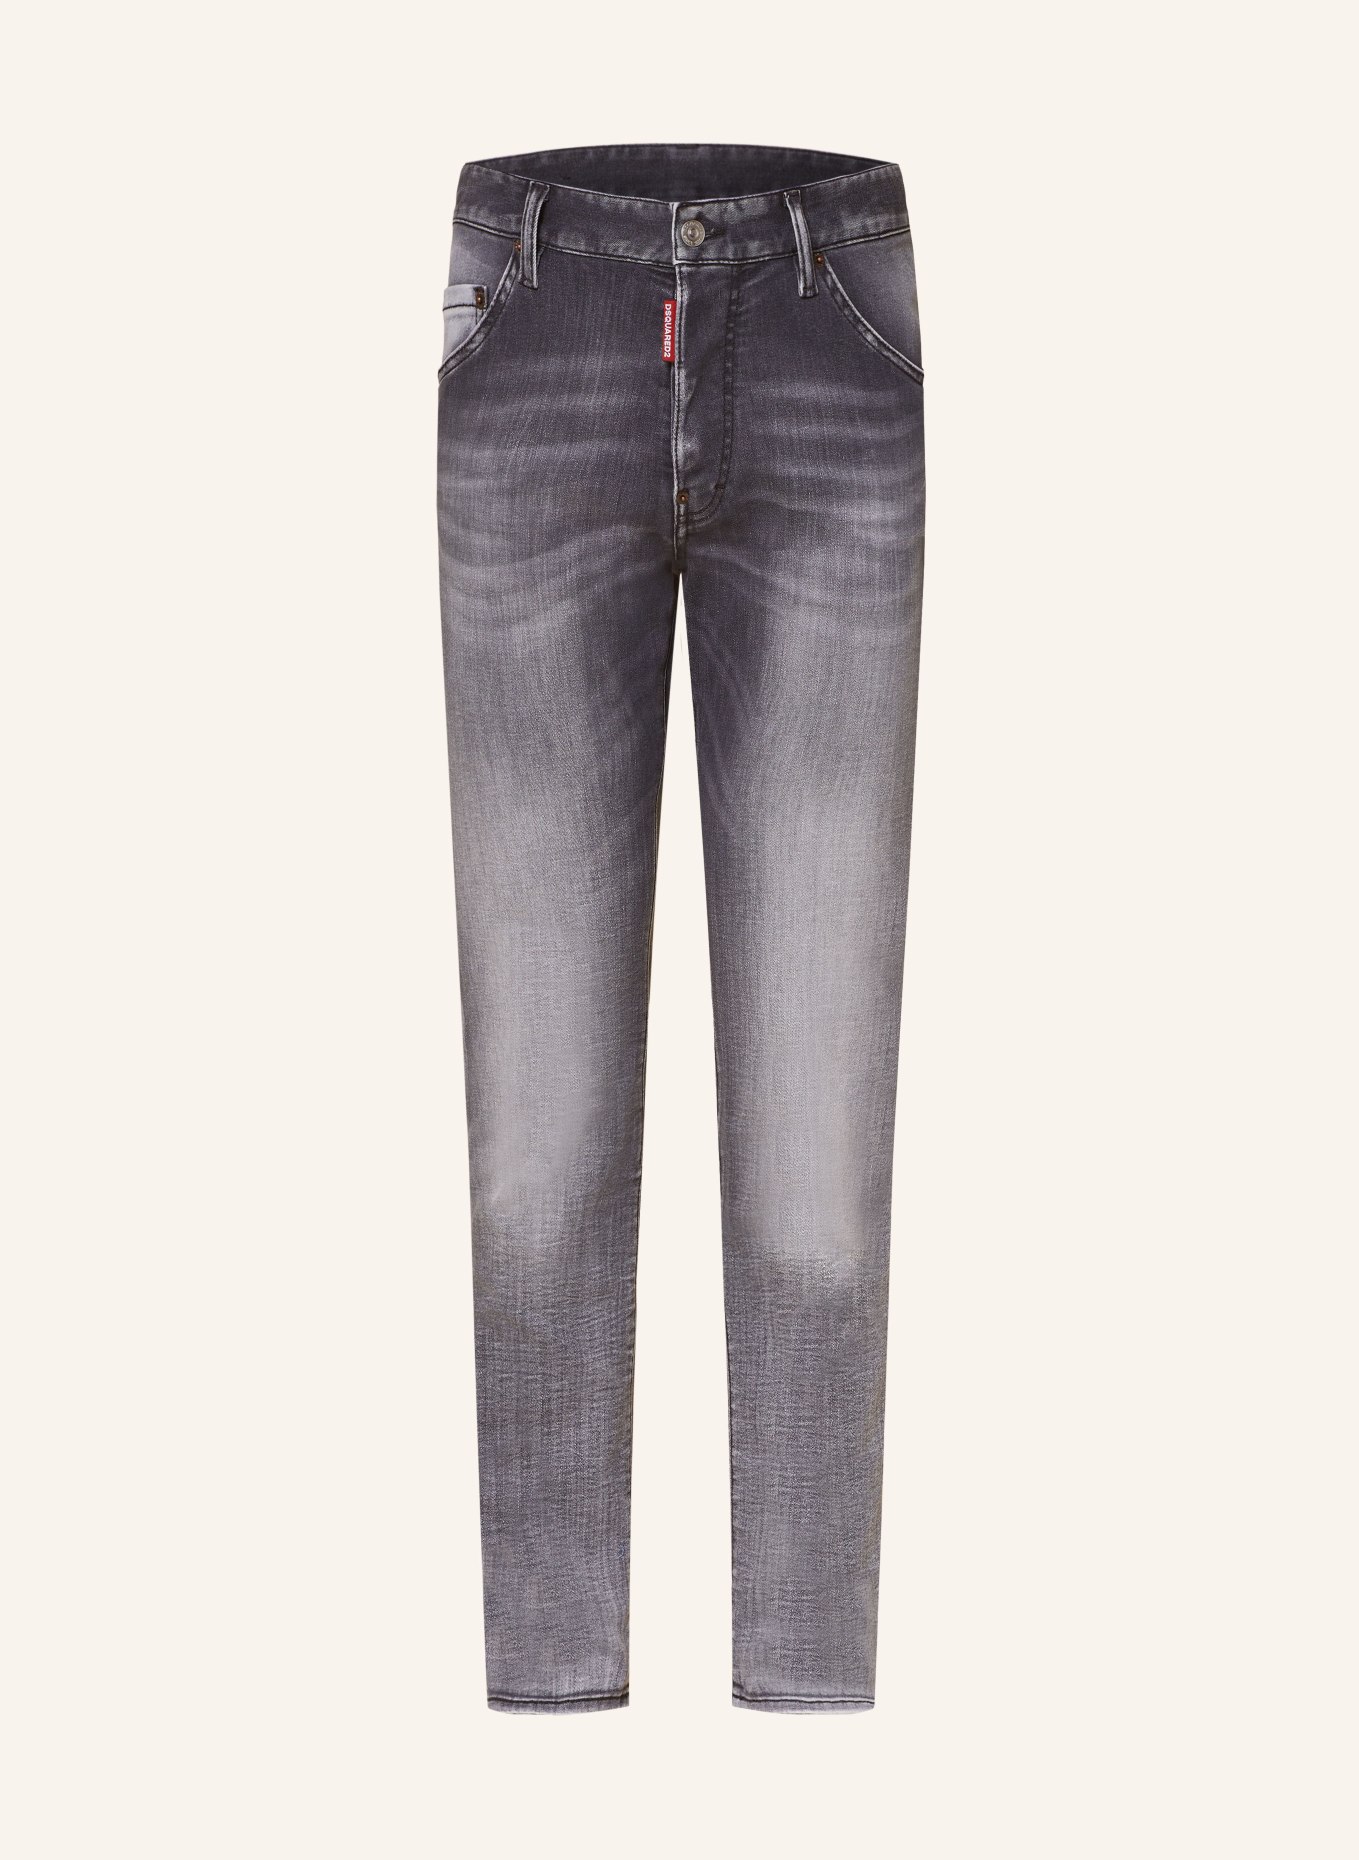 DSQUARED2 Jeans COOL GUY Extra Slim Fit, Farbe: 900 BLACK (Bild 1)